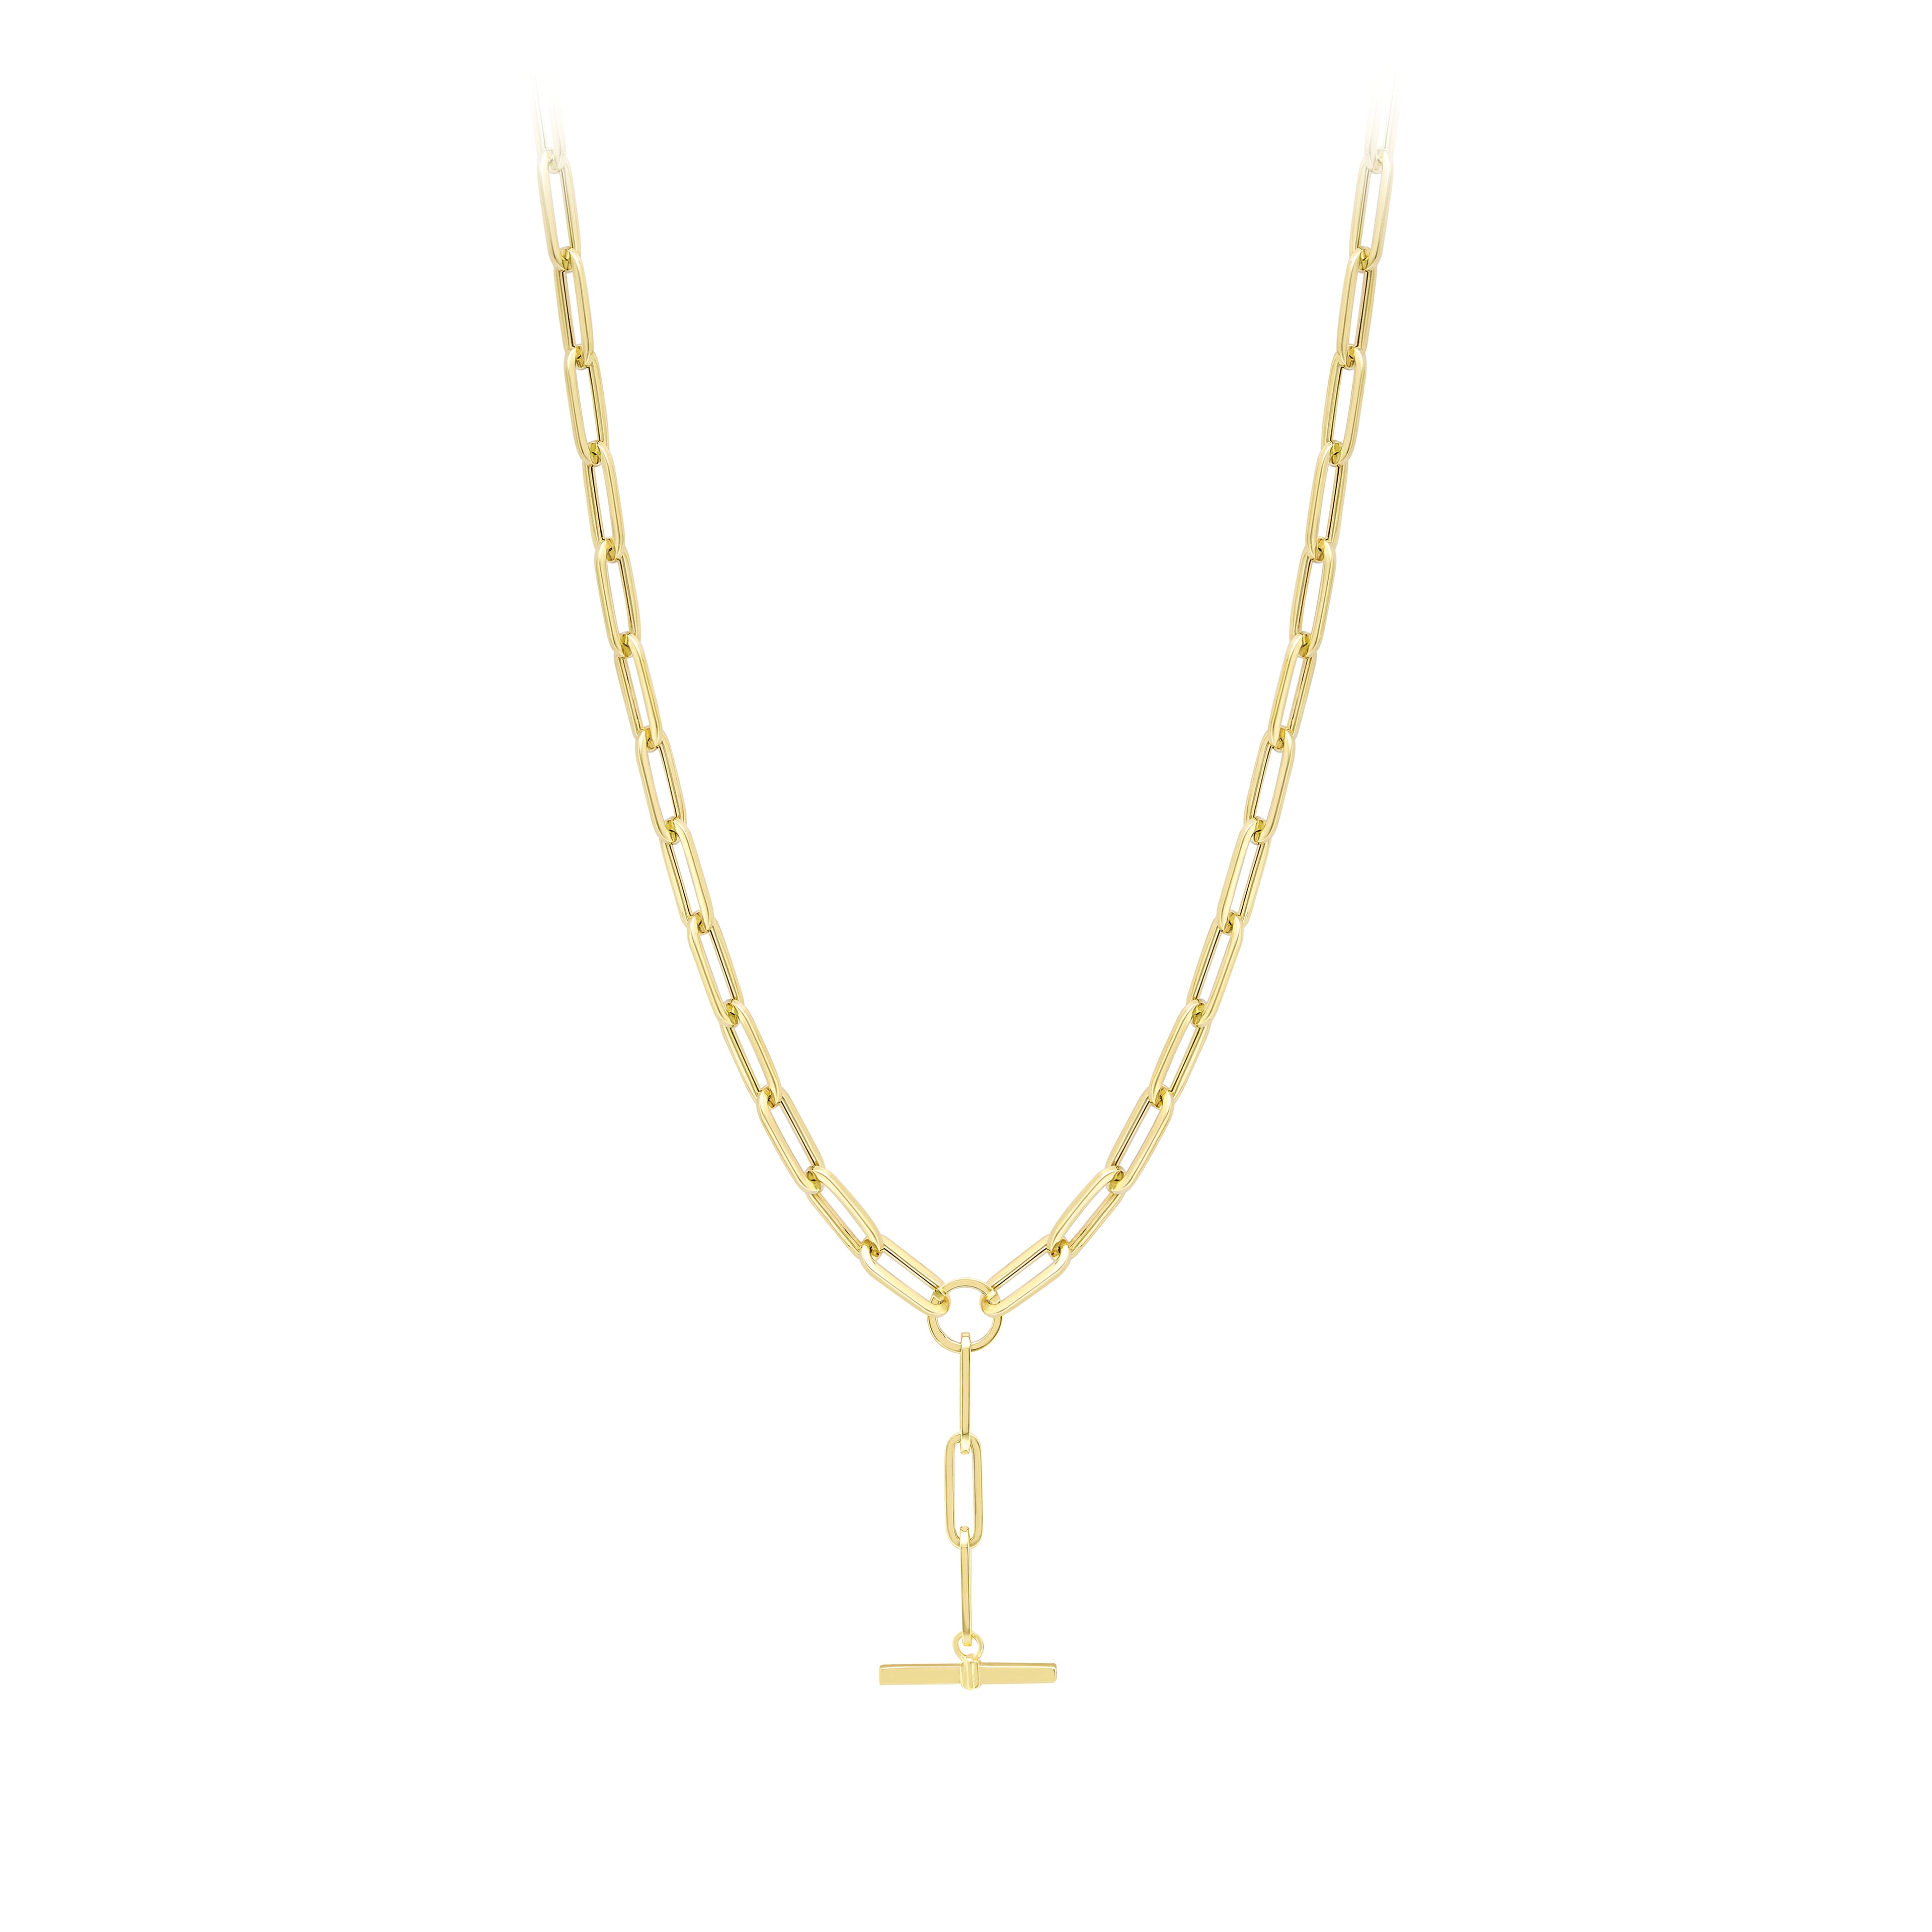 9ct. Yellow Gold T- Bar Necklace - Robert Anthony Jewellers, Edinburgh